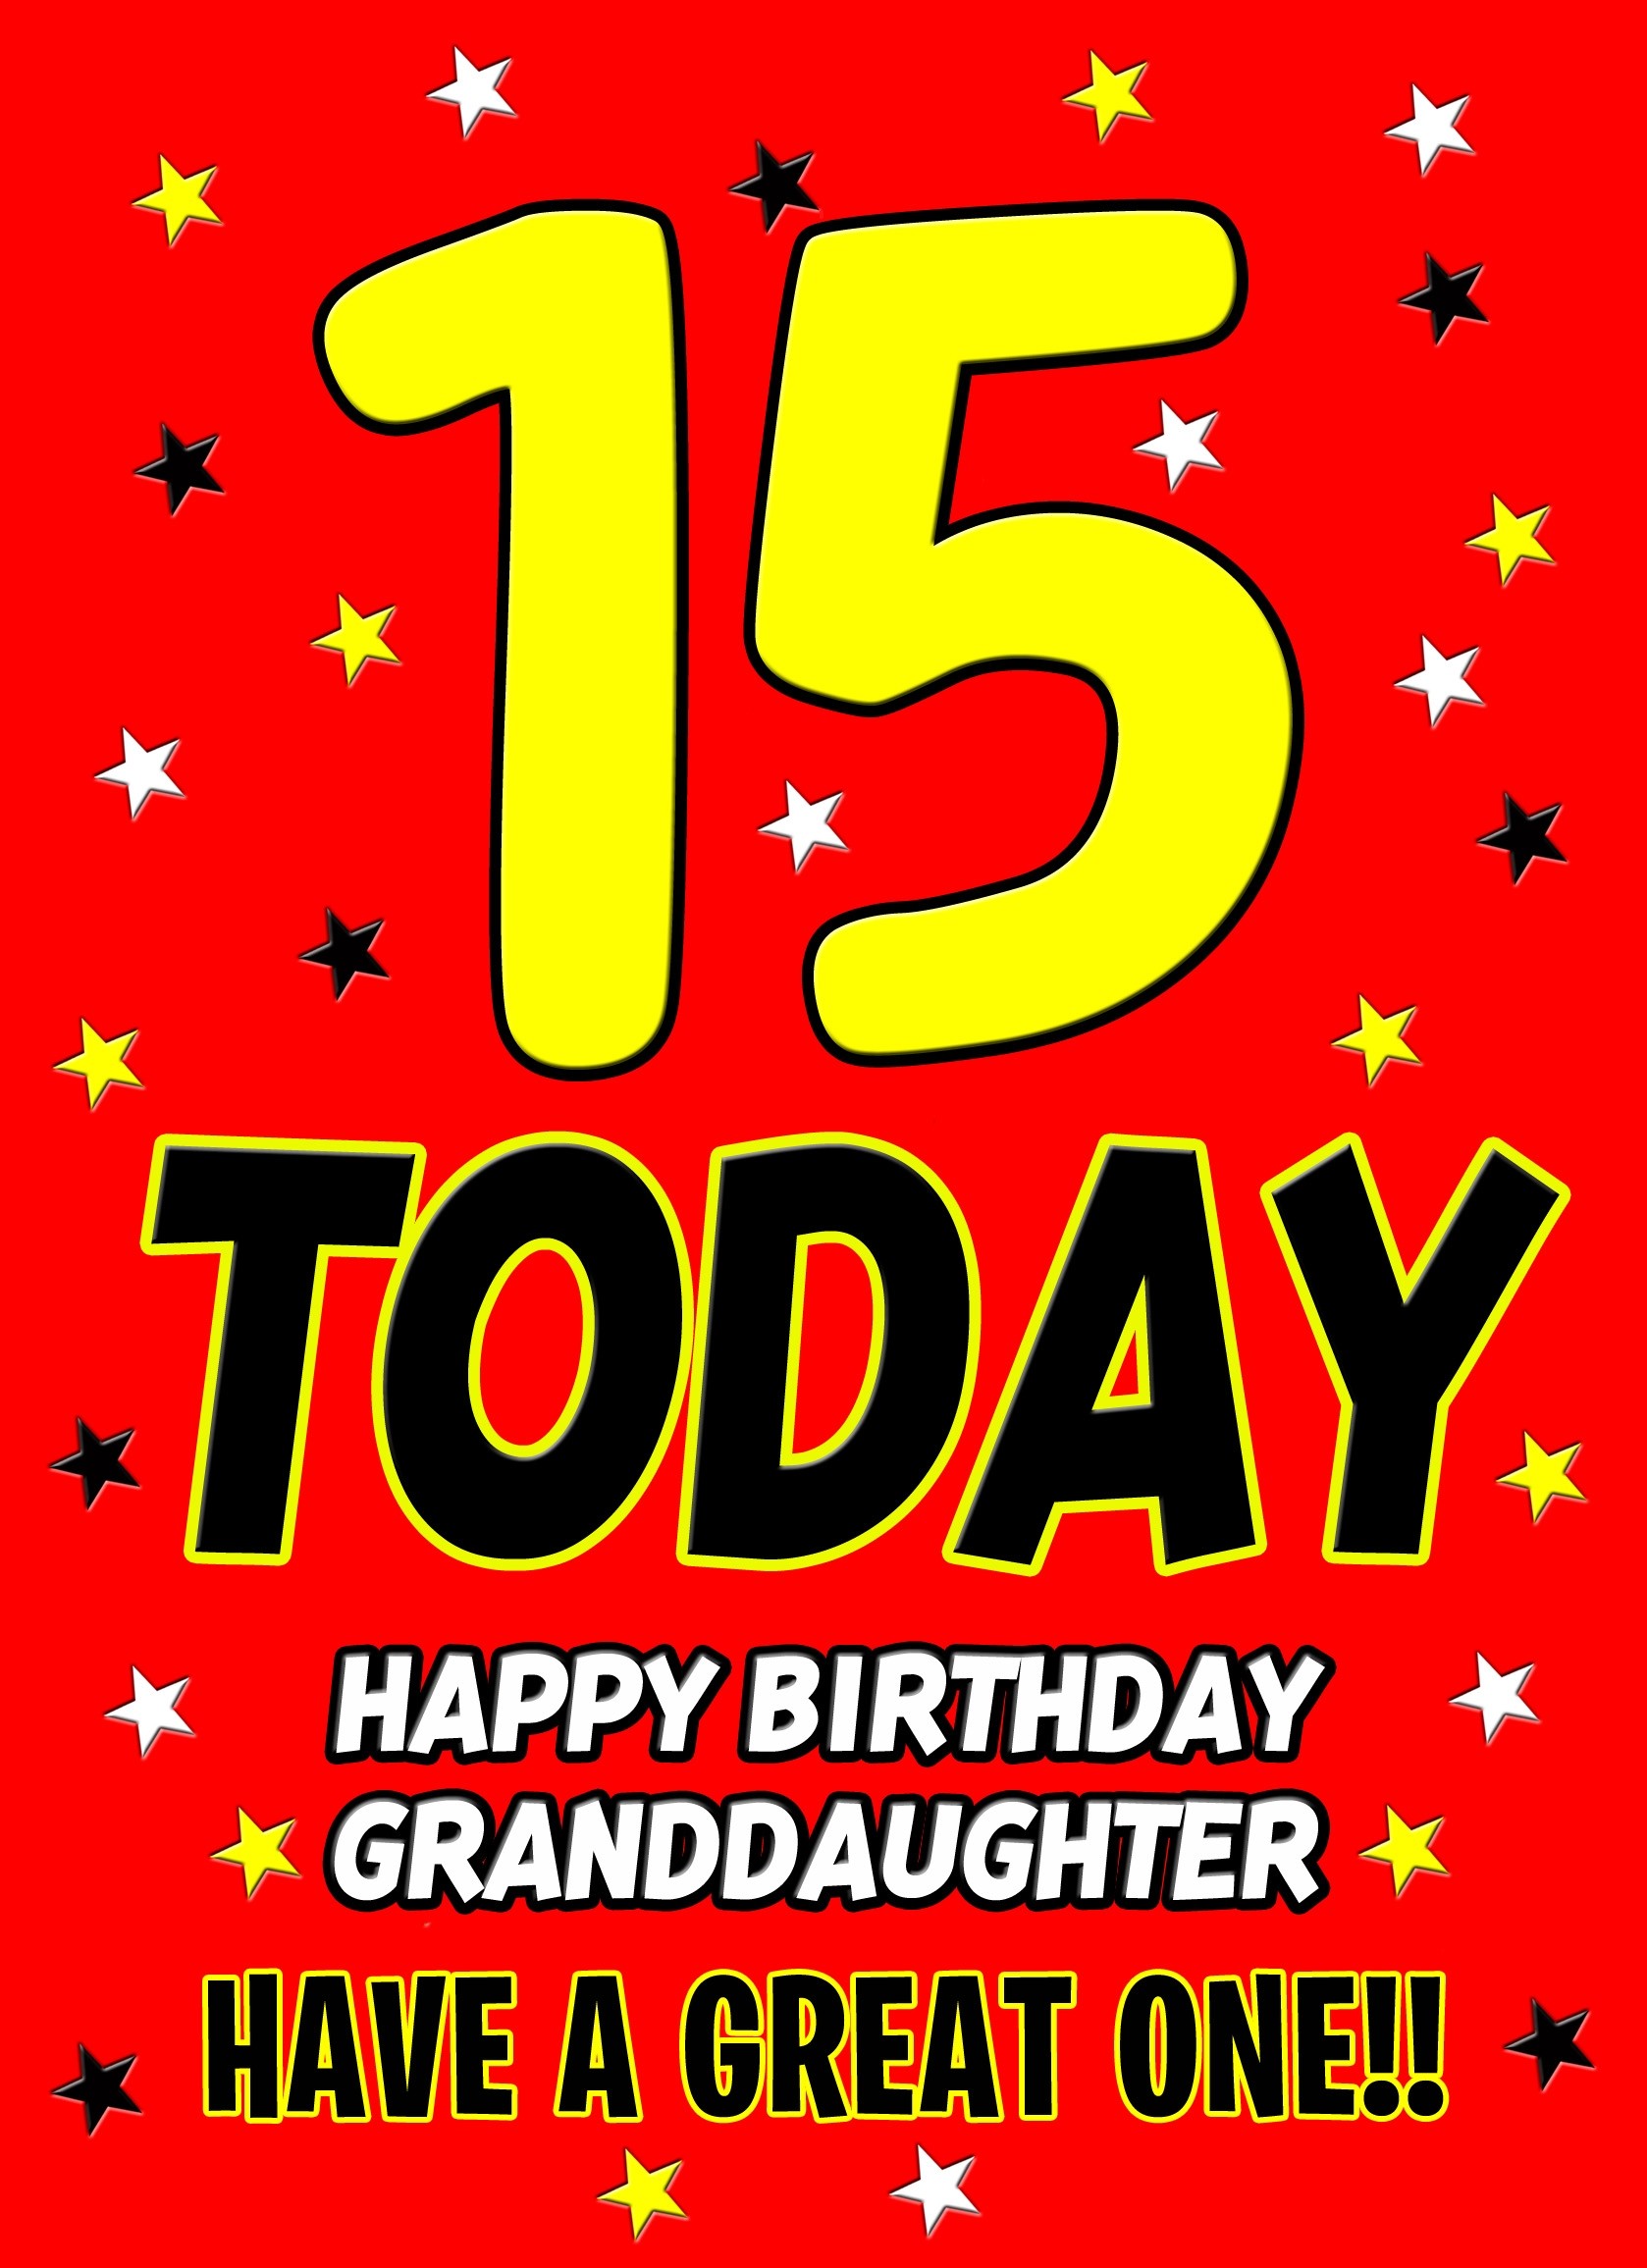 15 Today Birthday Card (Granddaughter)